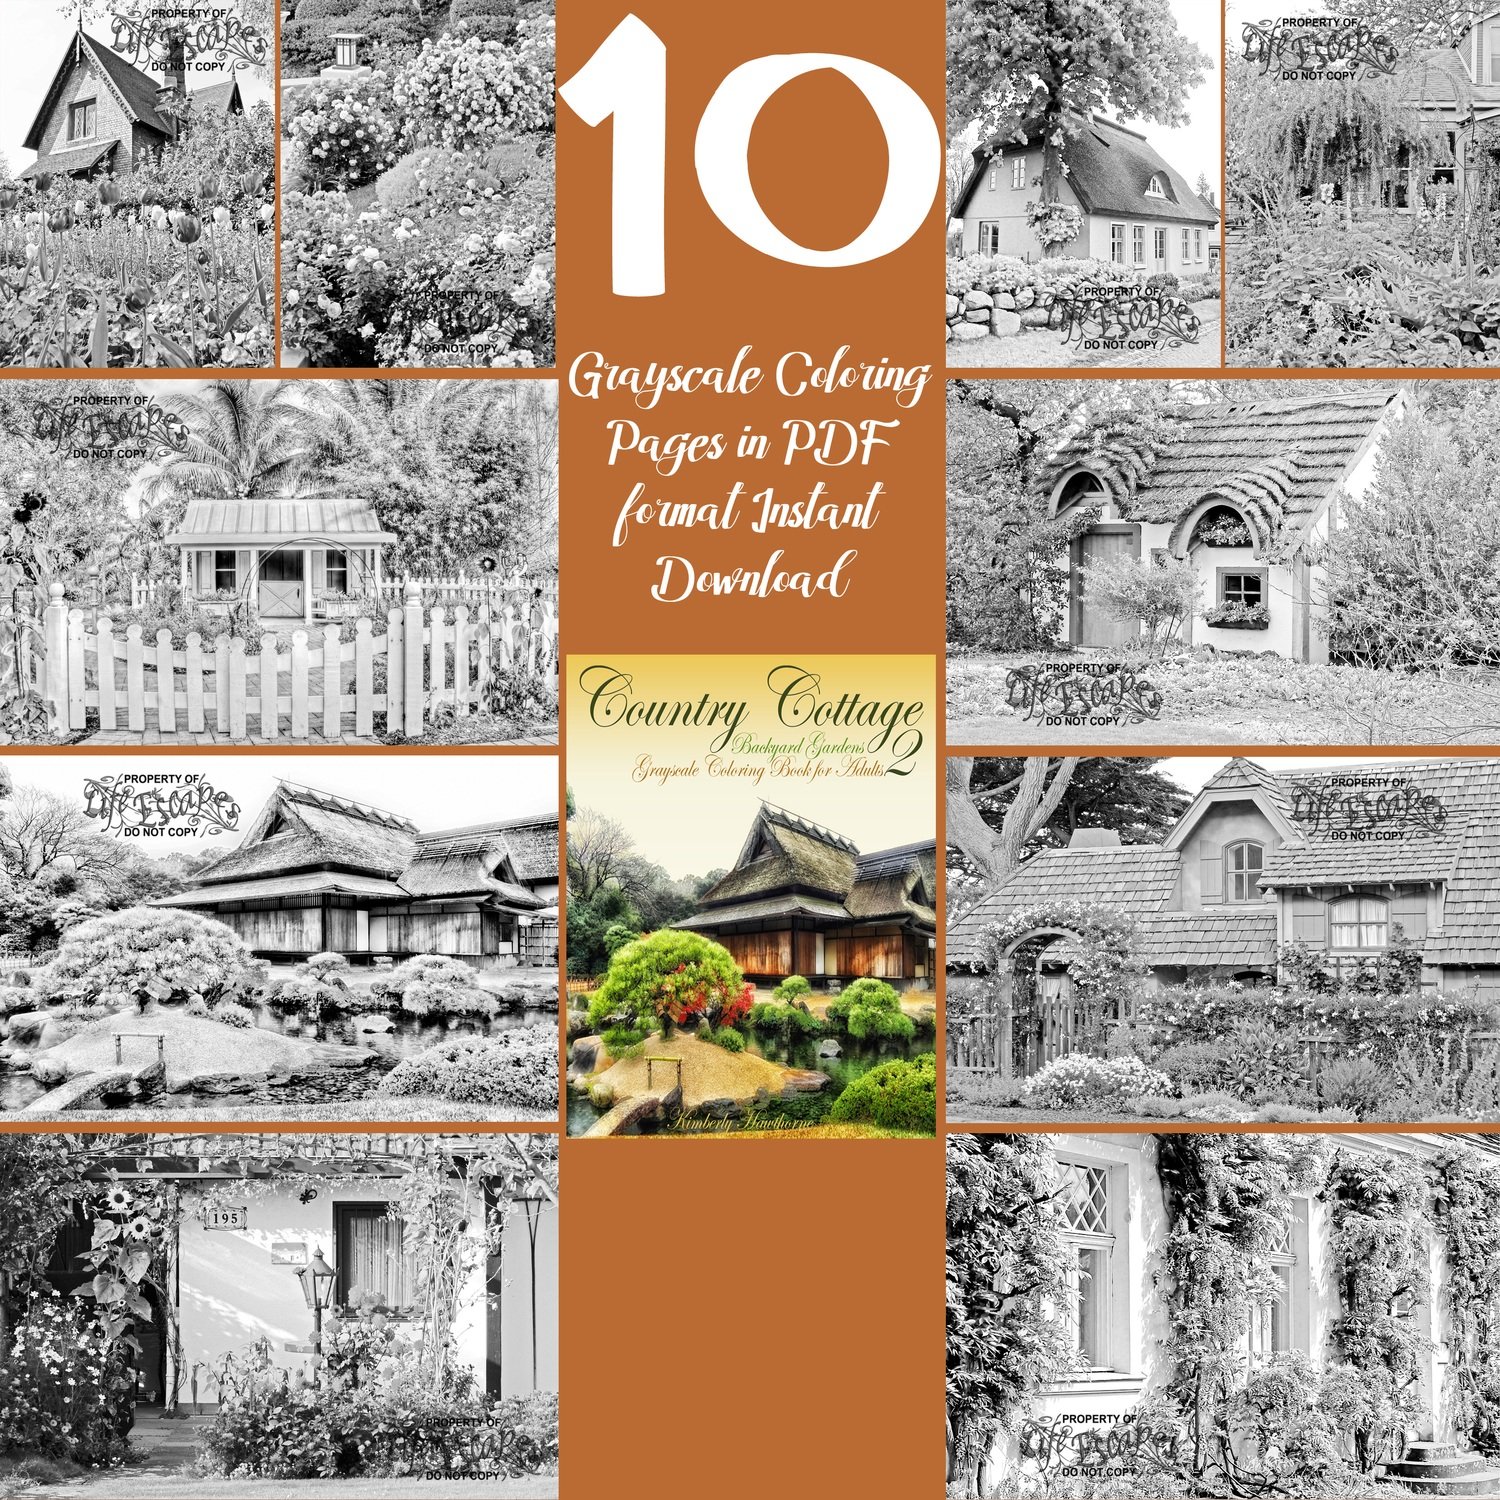 Country Cottage Backyard Gardens 2 Sampler Pack 10 Coloring Pages Digital Download